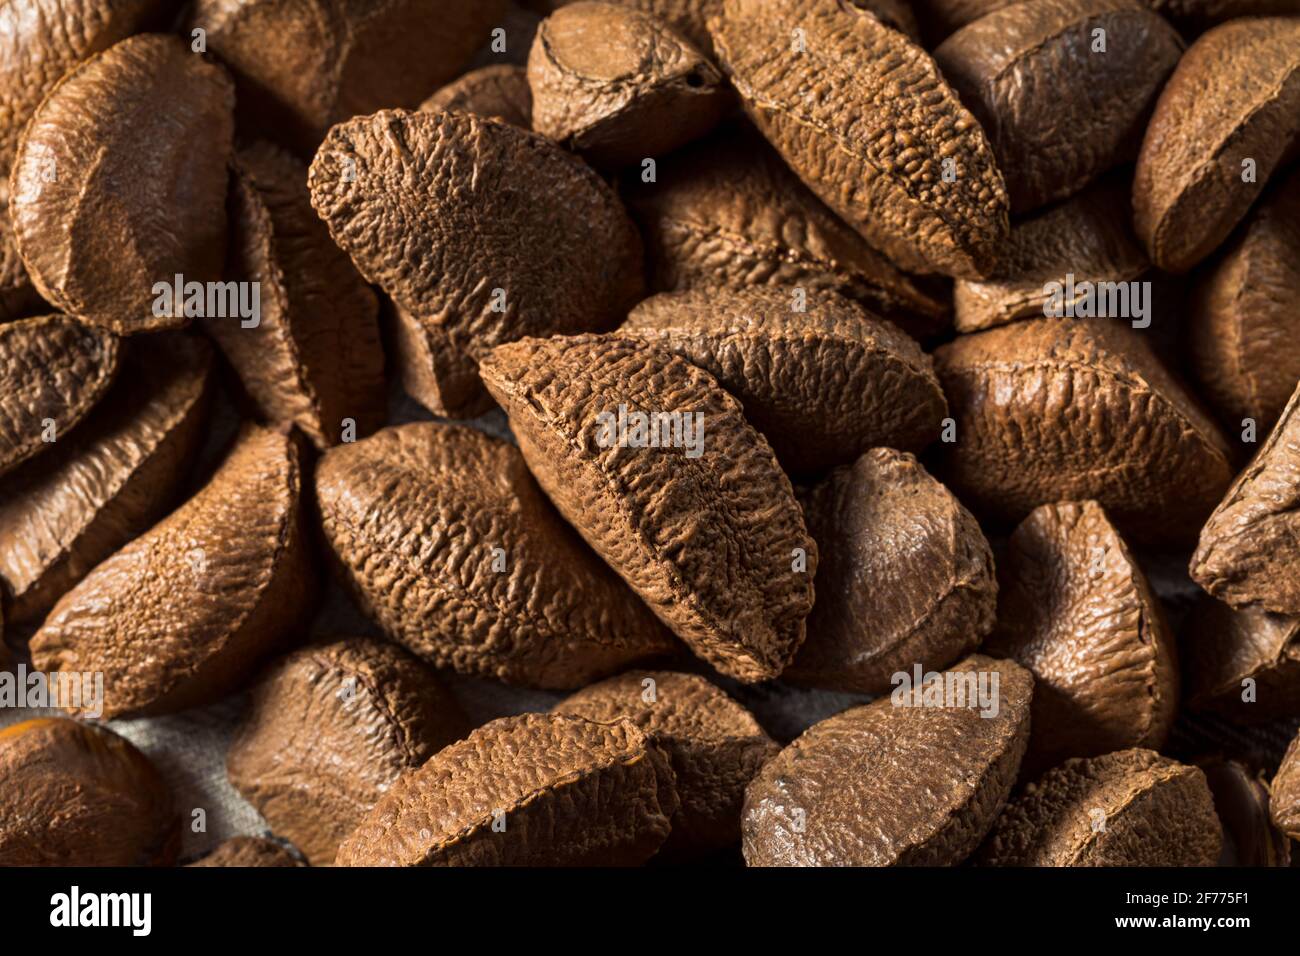 Raw Brown Organic Brazil Nuts Stock Photo - Image of tasty, fresh